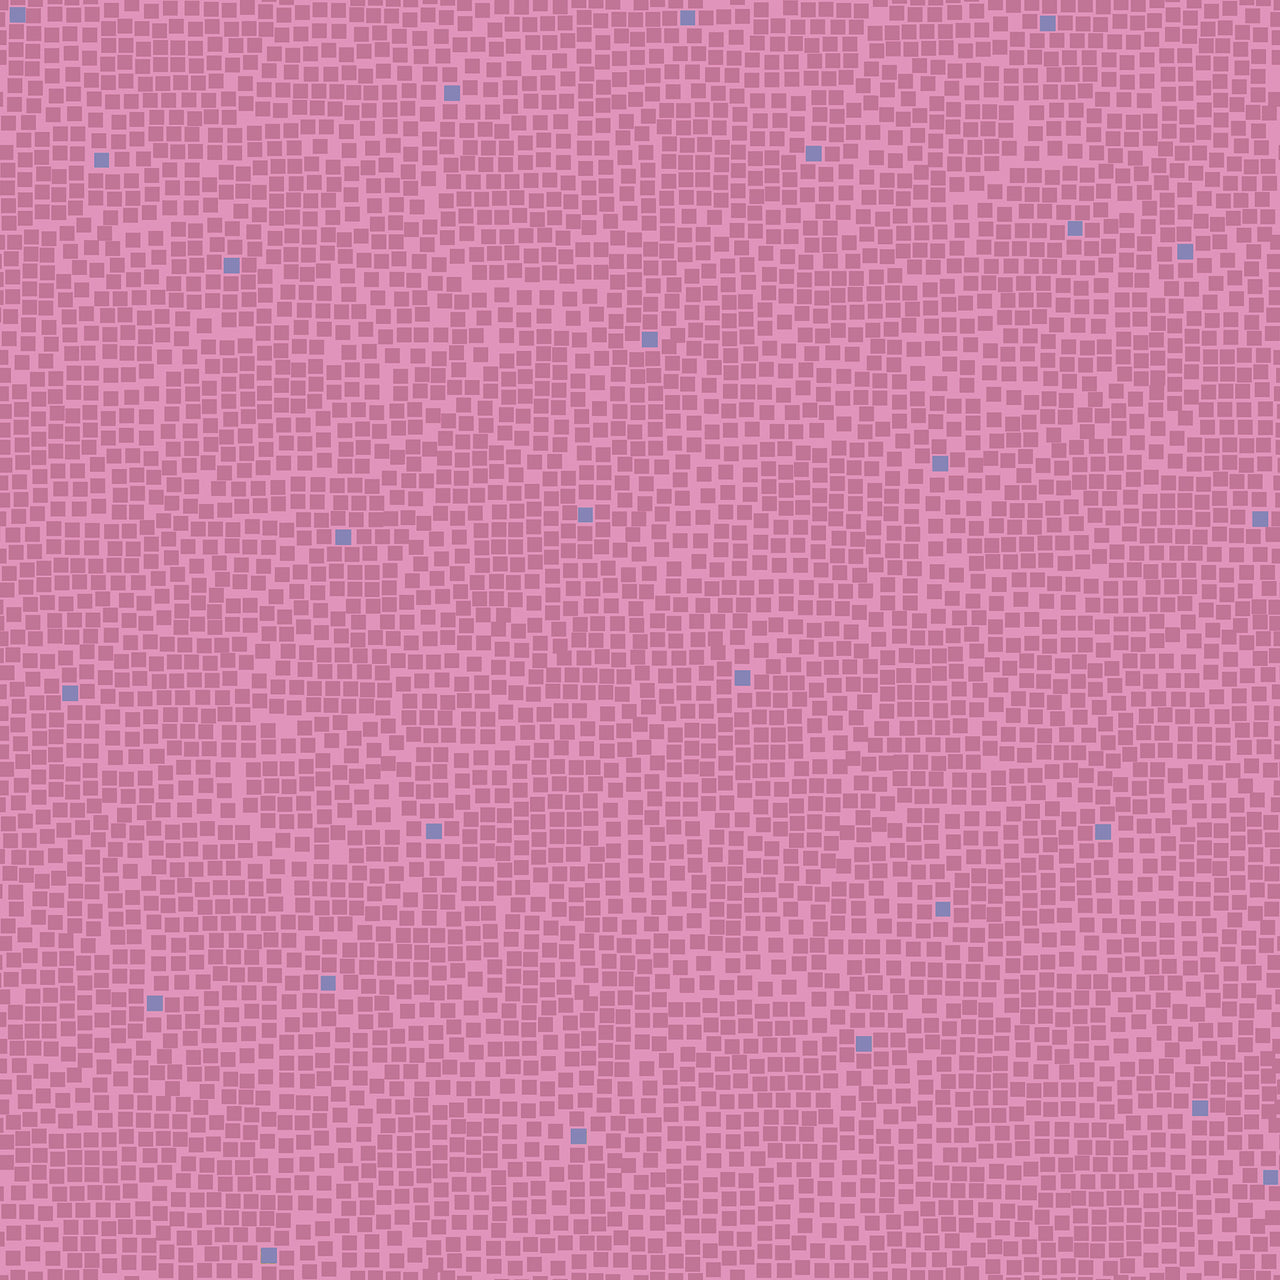 Pixel by Rashida Coleman Hale : RS1046-33 Lupine : Ruby Star Society